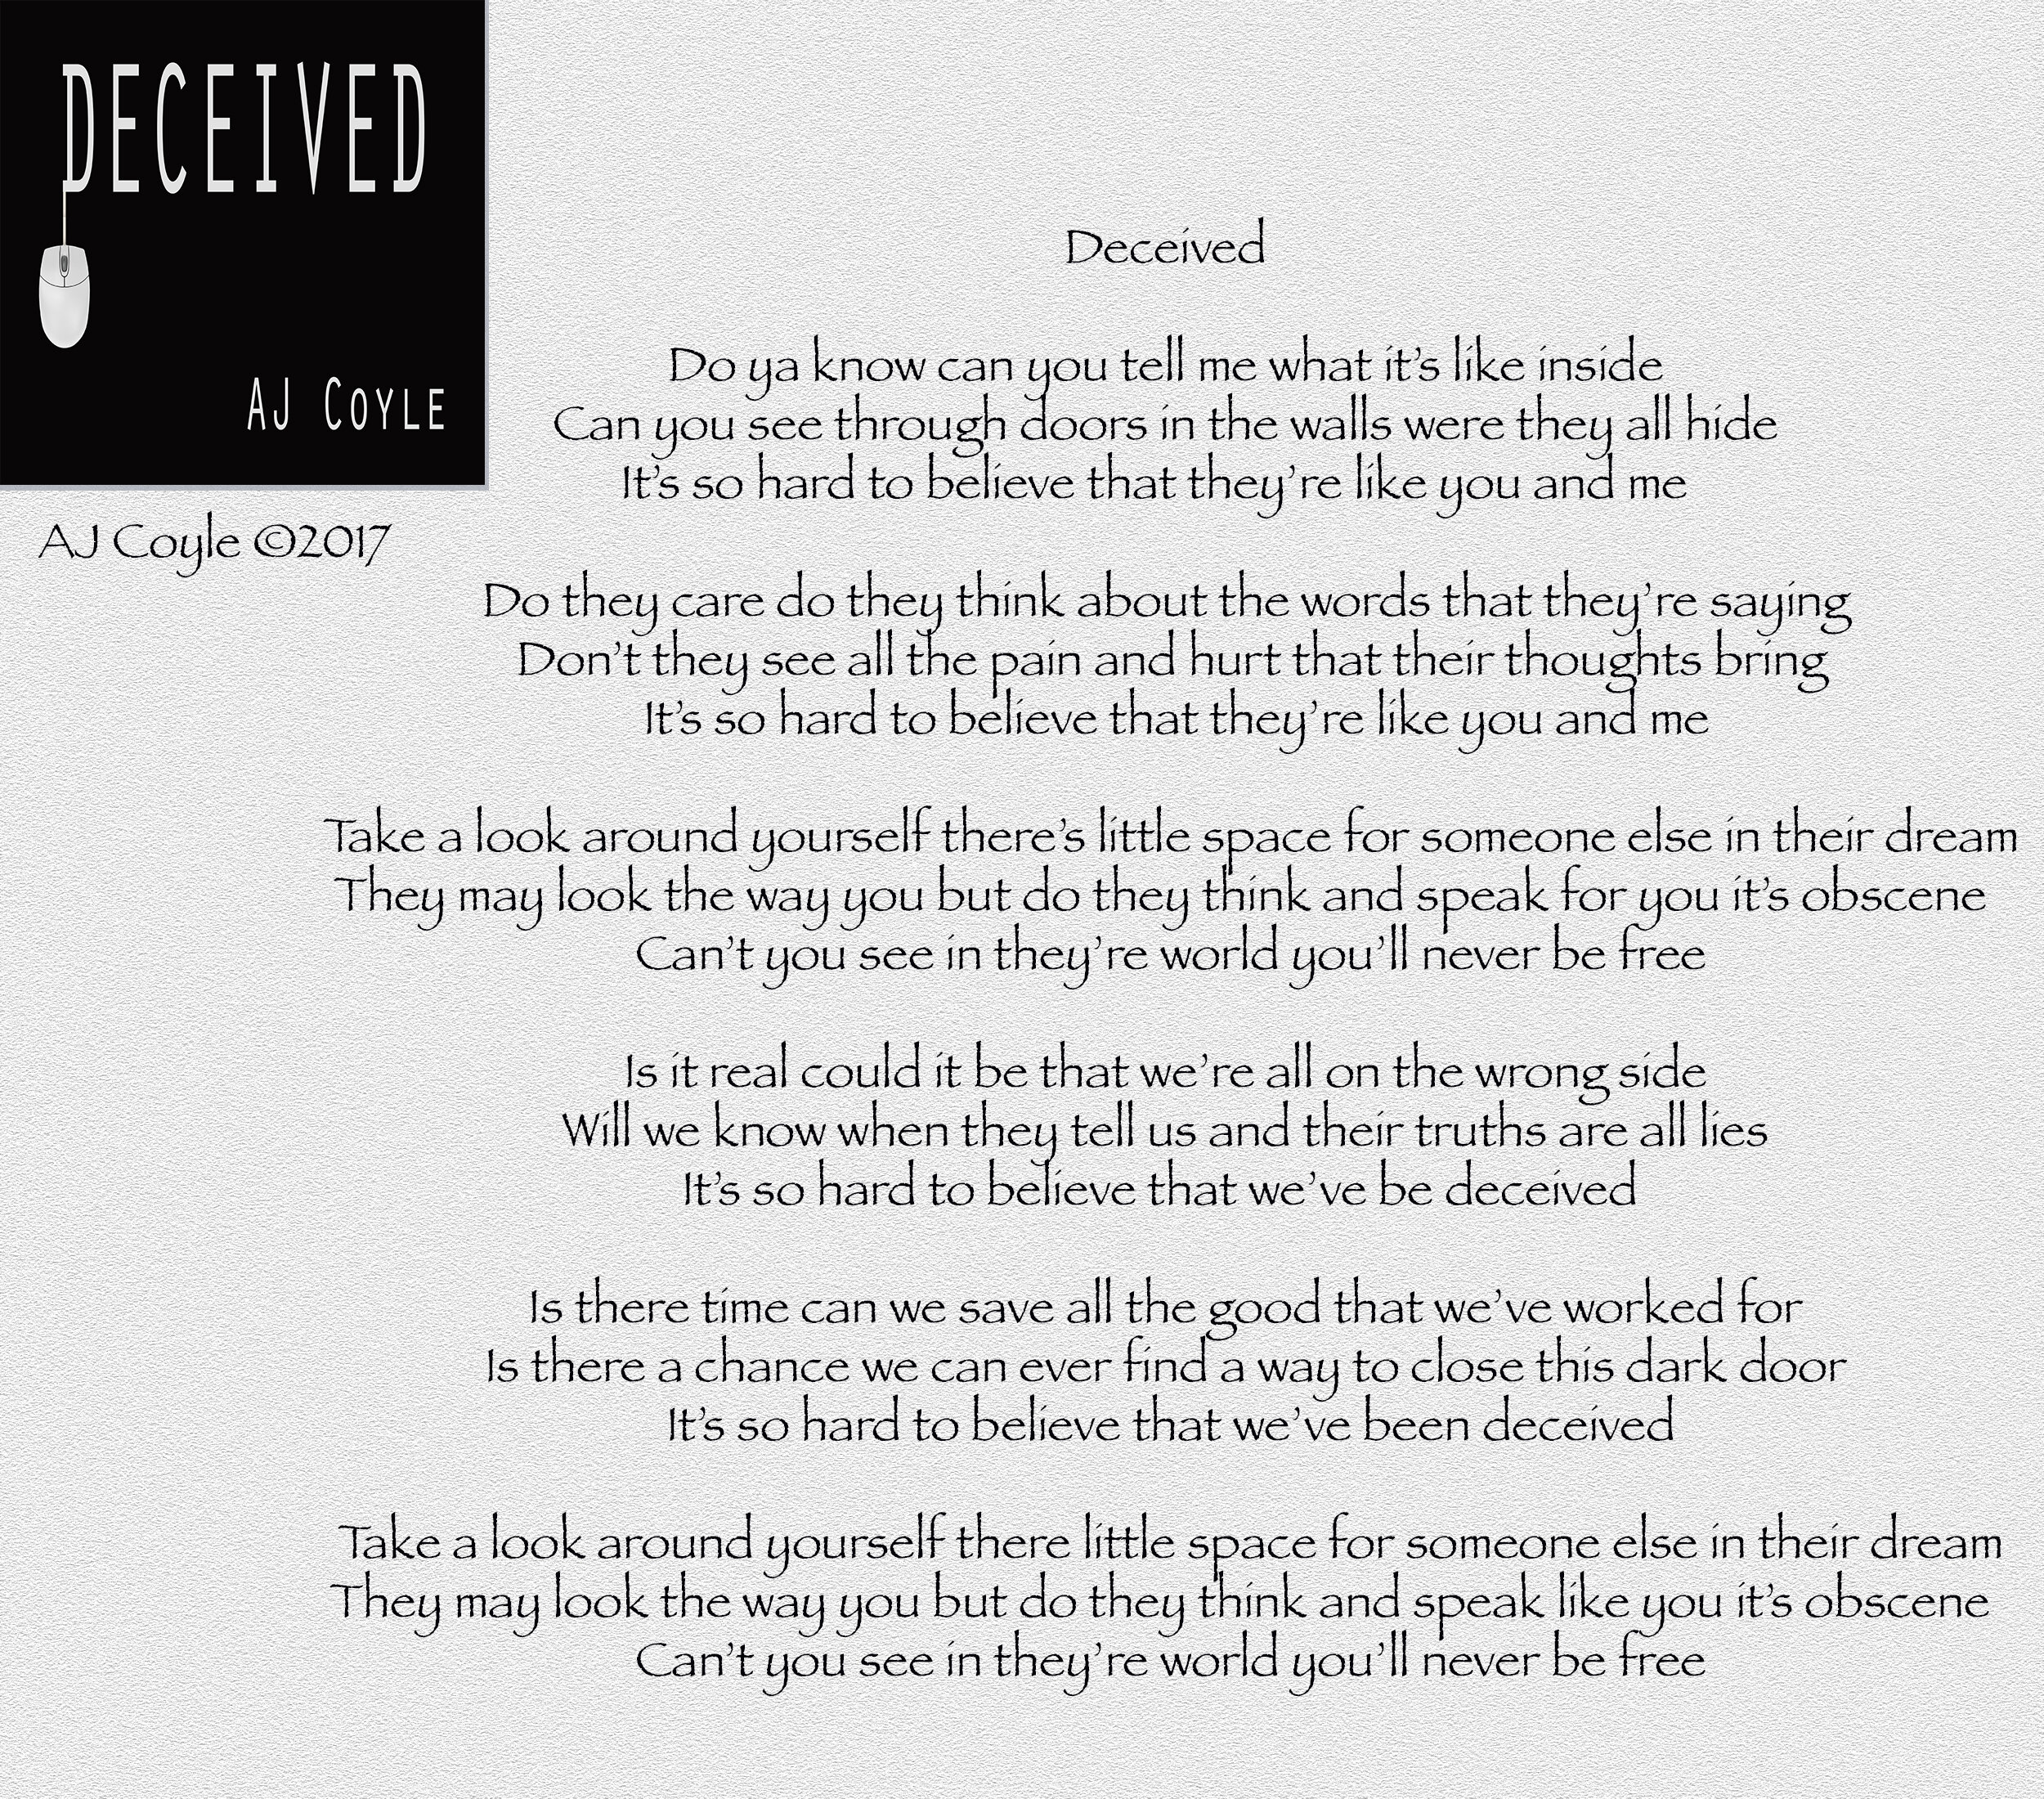 Deceived - AJ Coyle